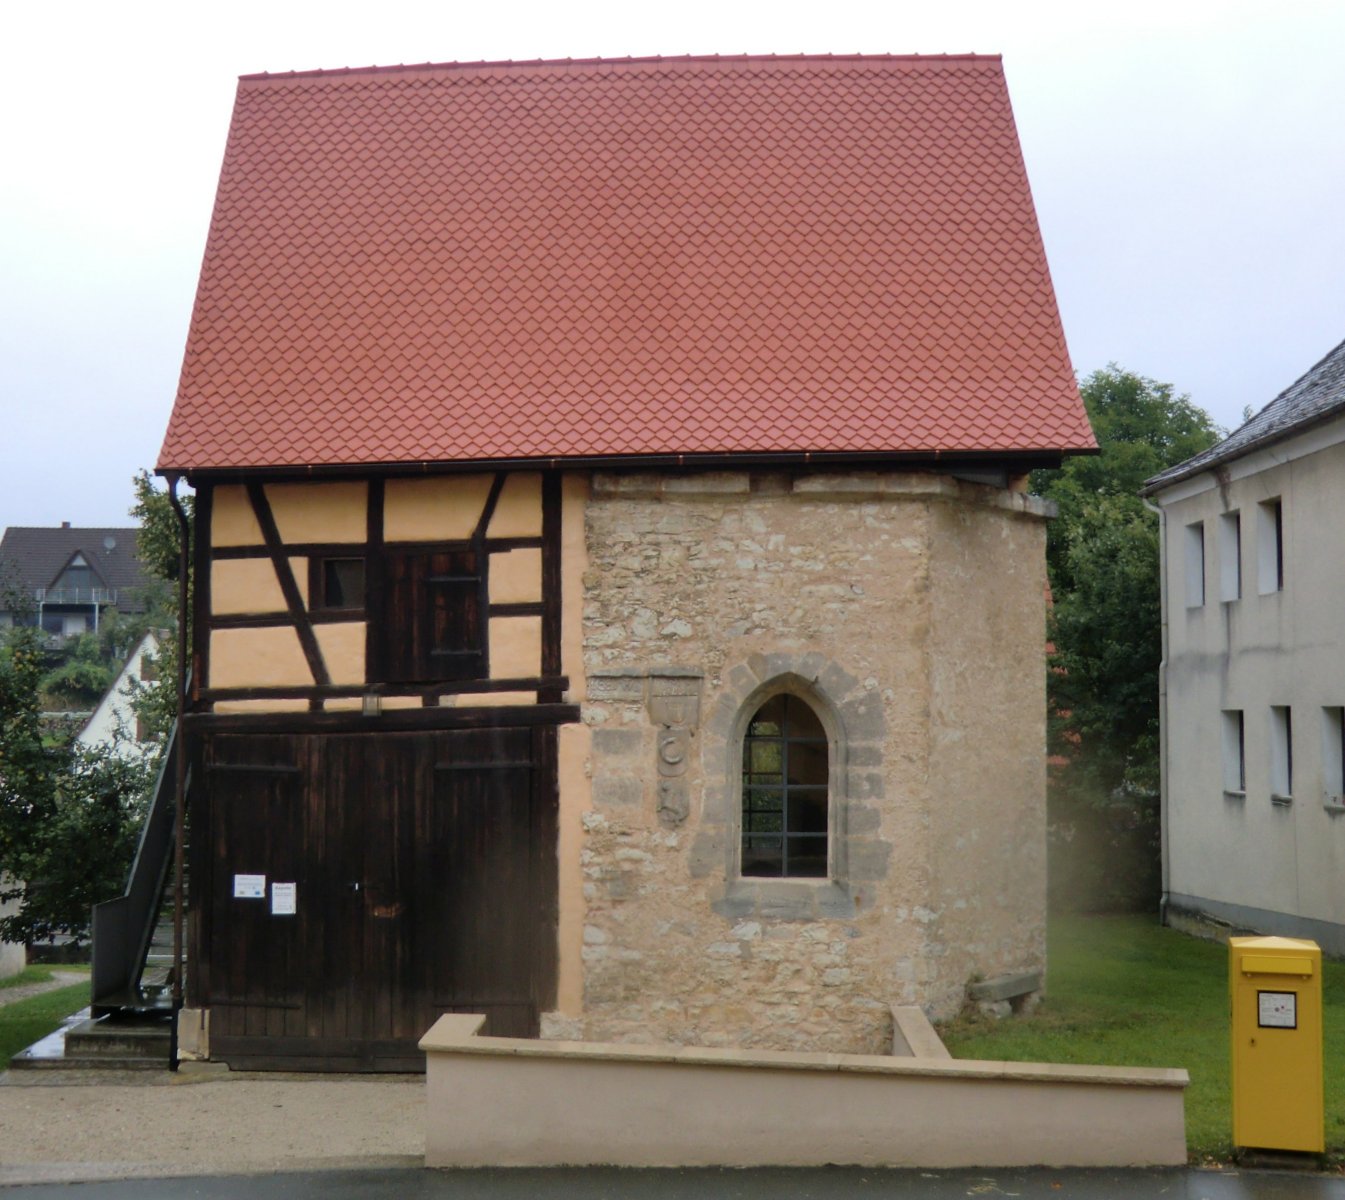 Willibaldskapelle, ältester erhaltener Teil des Klosters Engelthal, Urbau um 1058